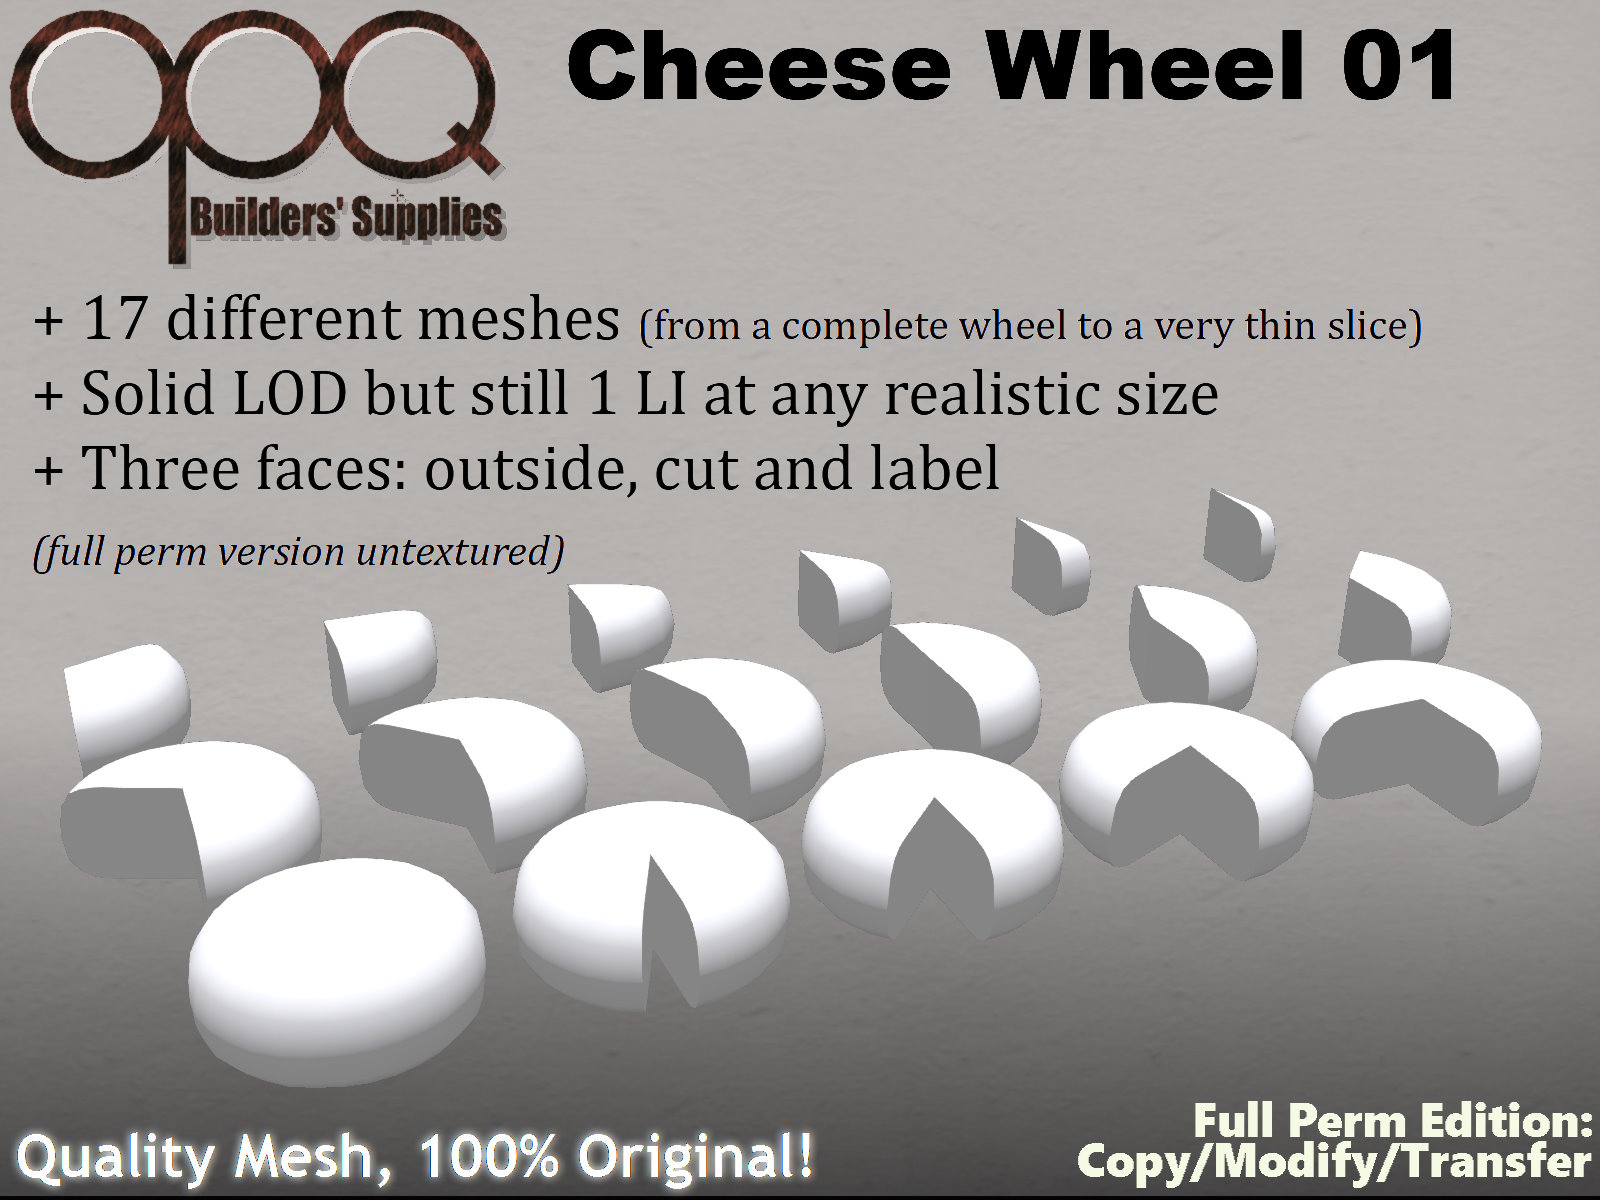 OPQ Cheese Wheel 01 set Poster.jpg